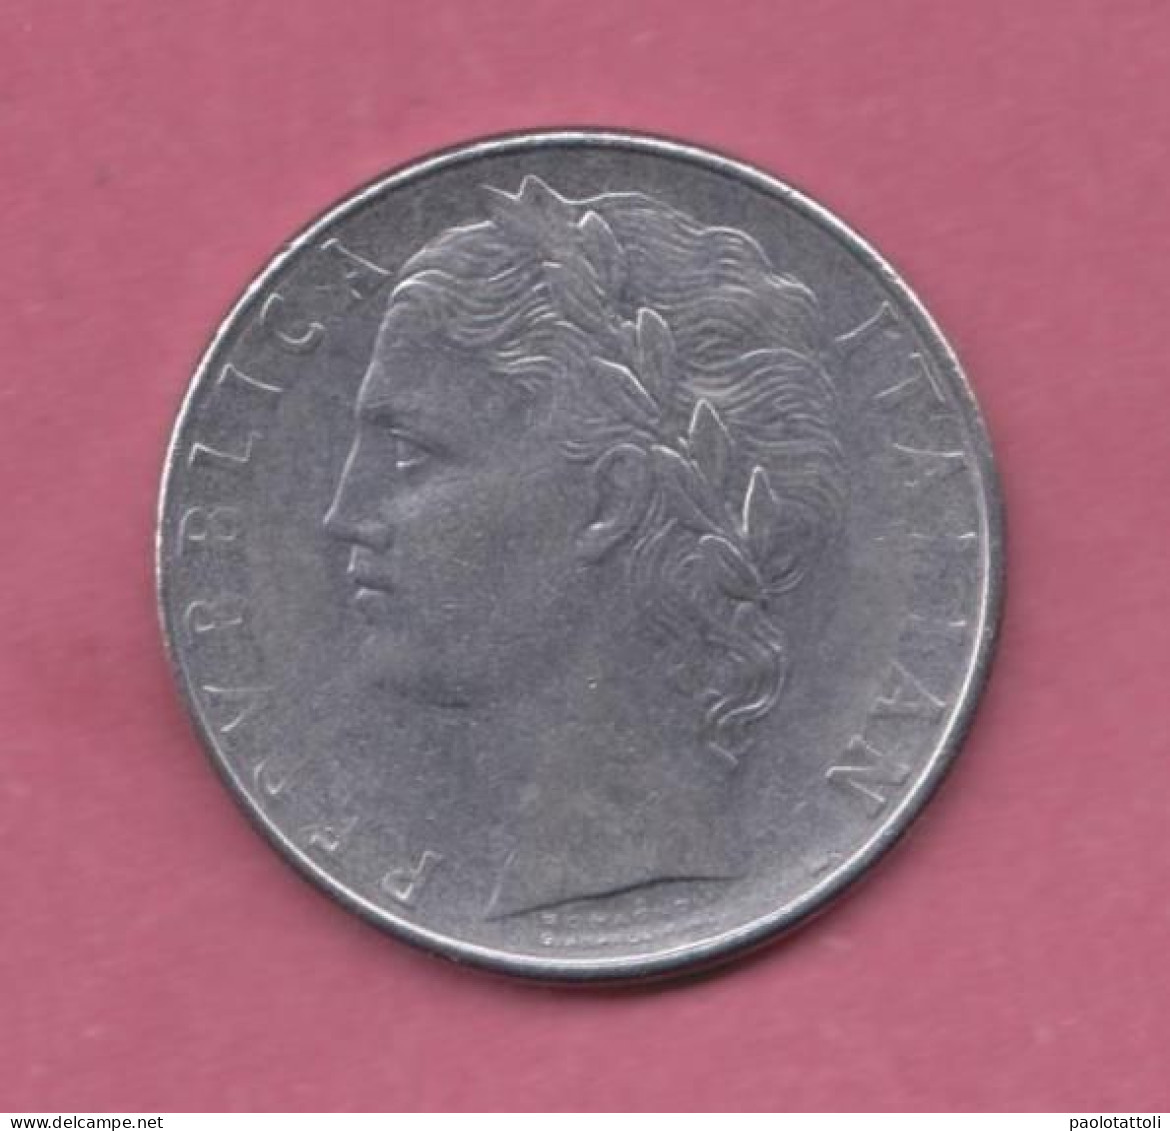 Italia, 1977- 100 Lire ( Large Type)- Acmonital- Obverse Allegory Of Italian Repubblic. Reverse Goddess Minerva- - 100 Lire